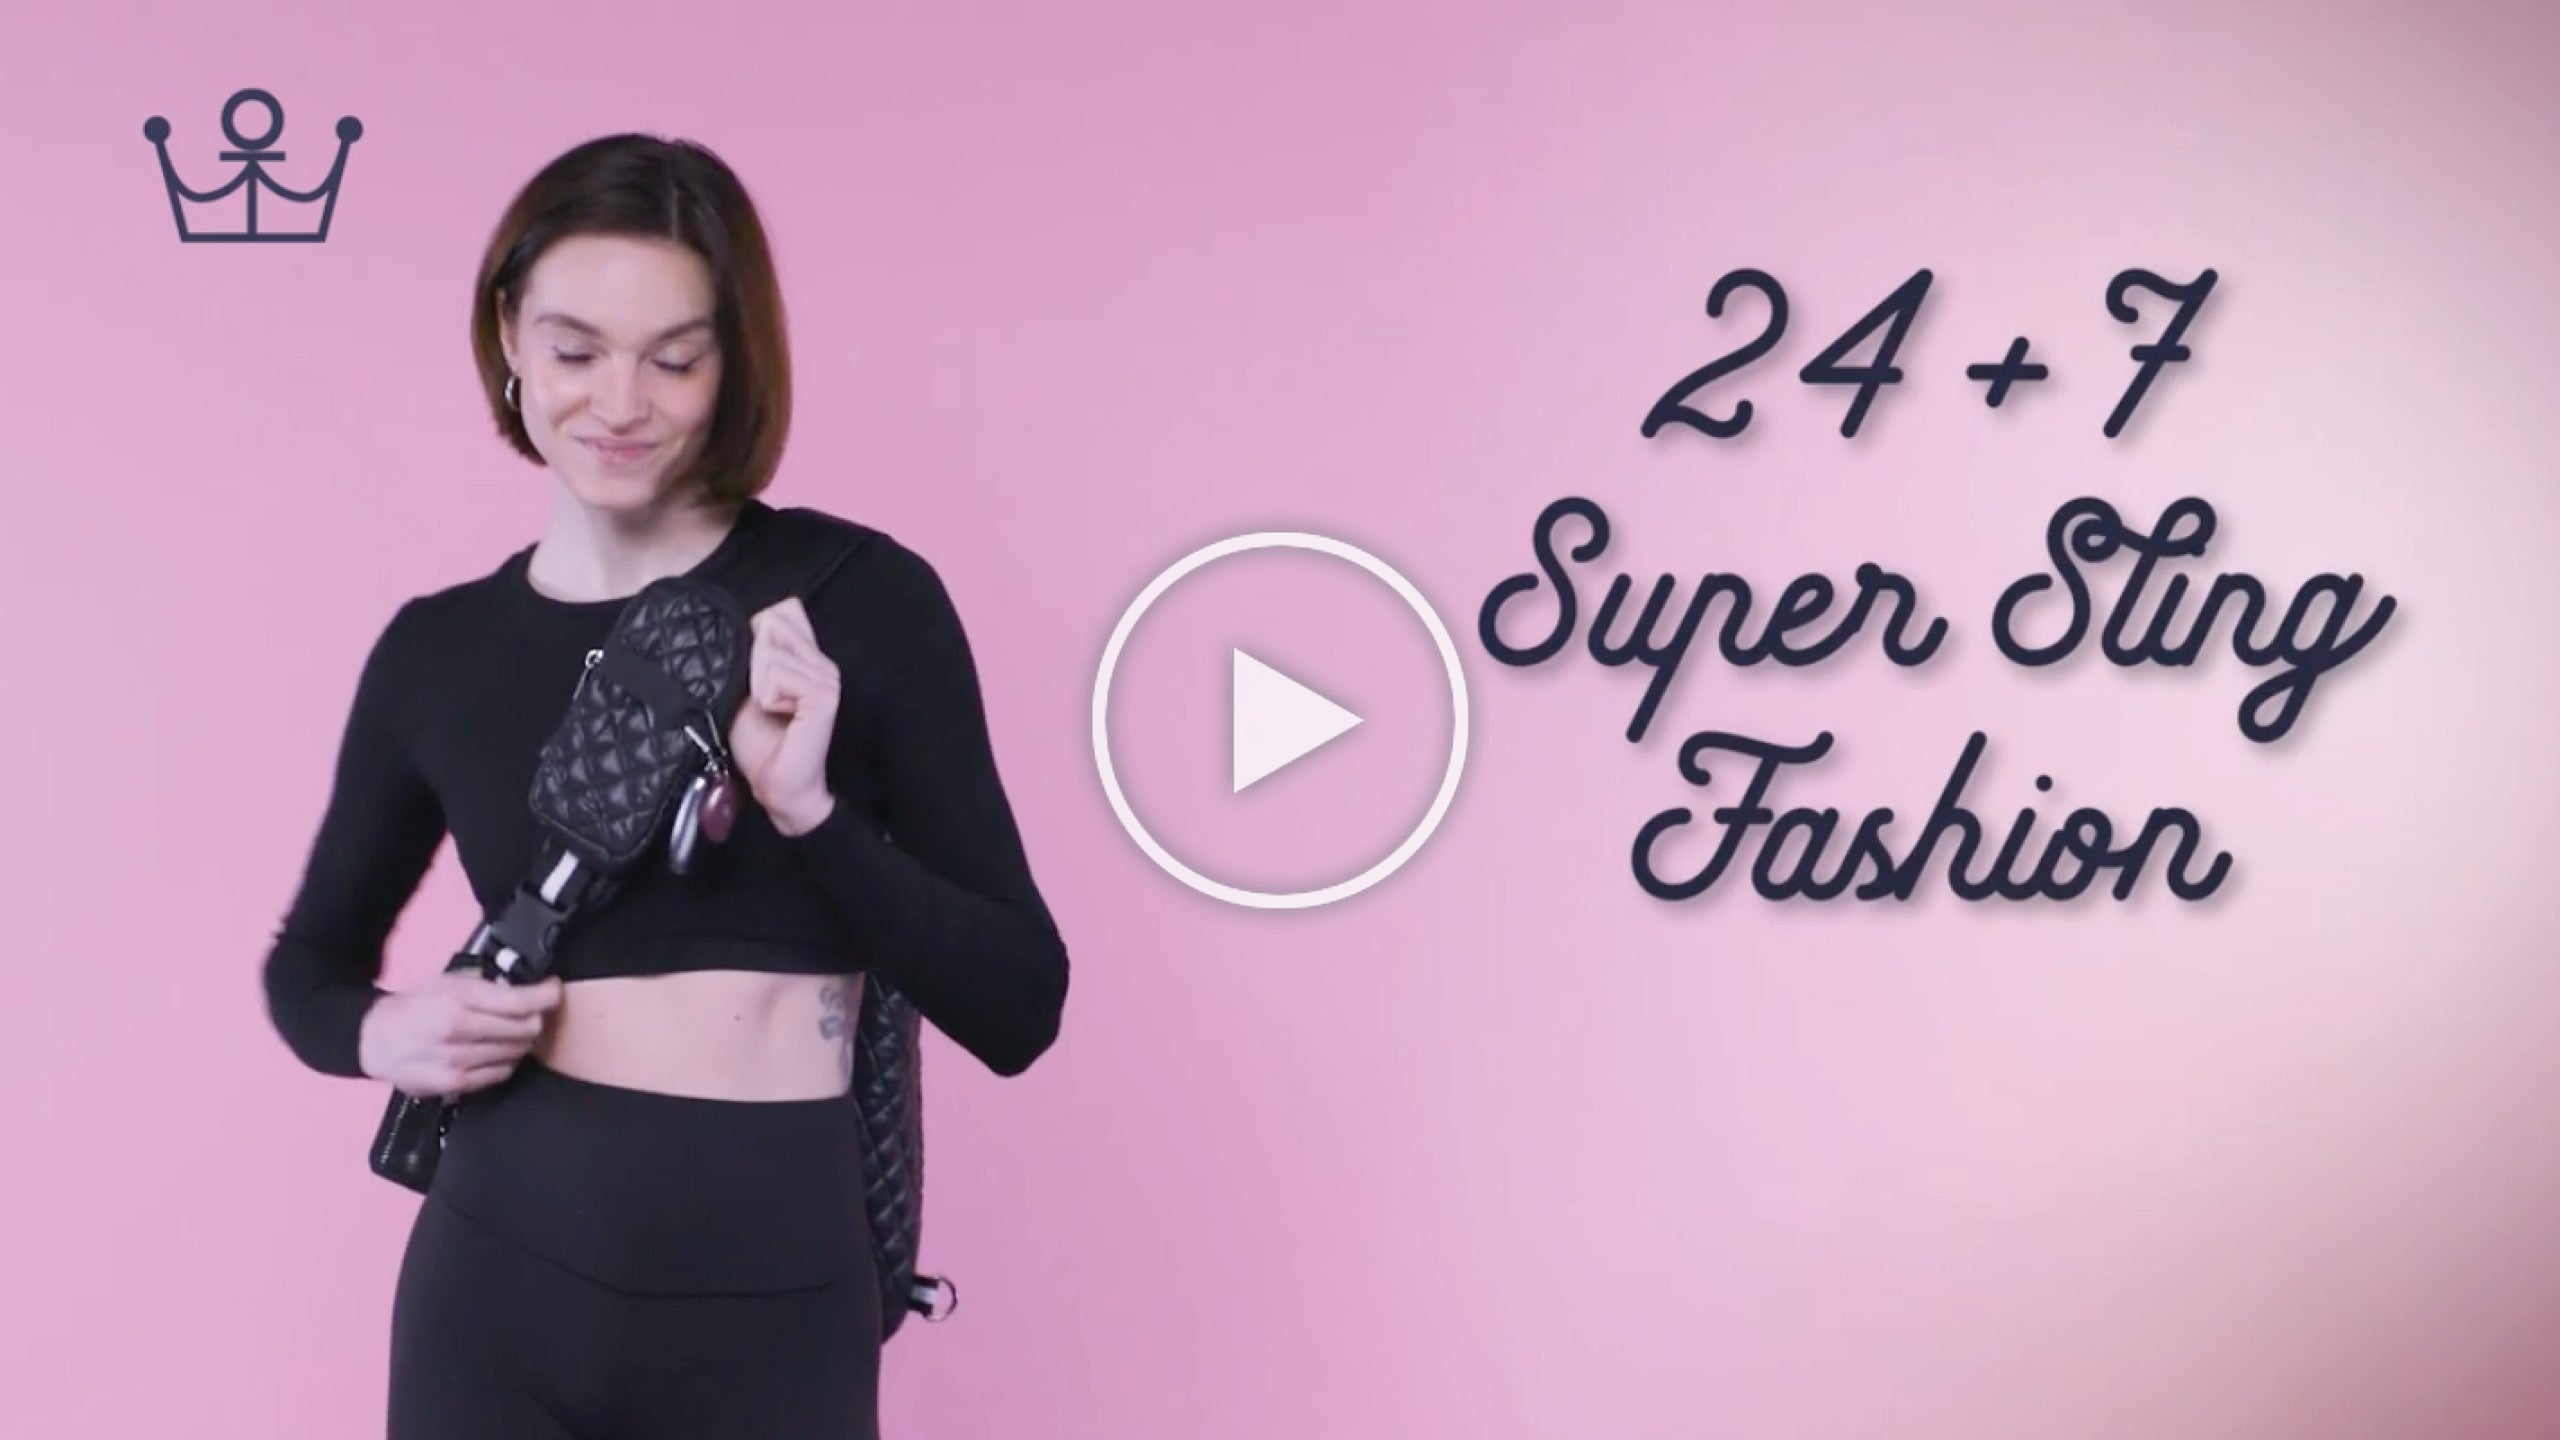 Video of 24 + 7 Super Sling